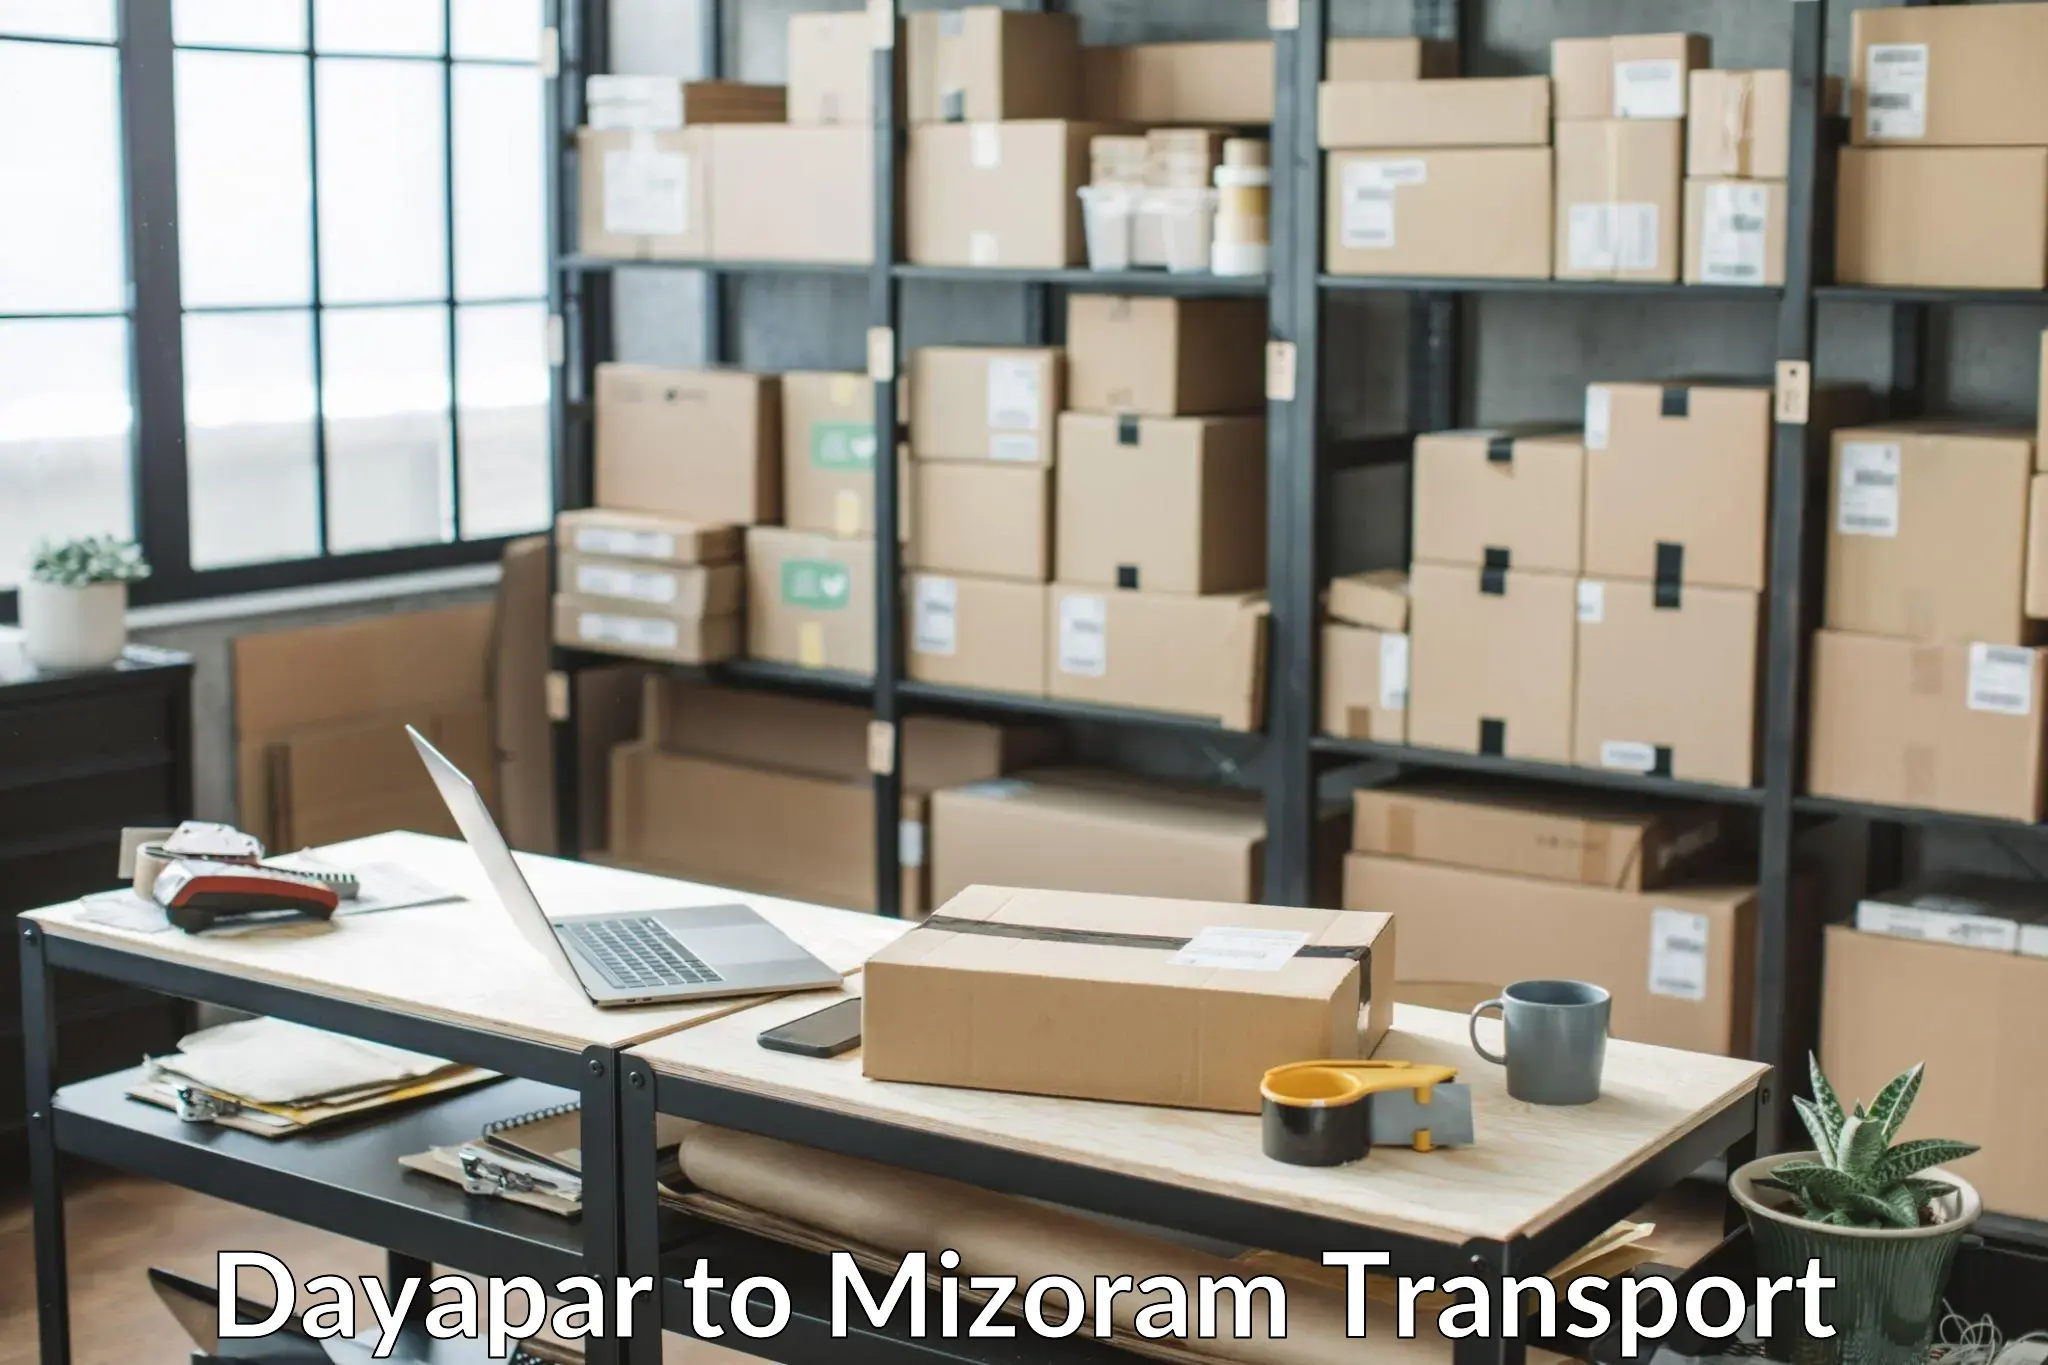 Daily parcel service transport Dayapar to Mizoram